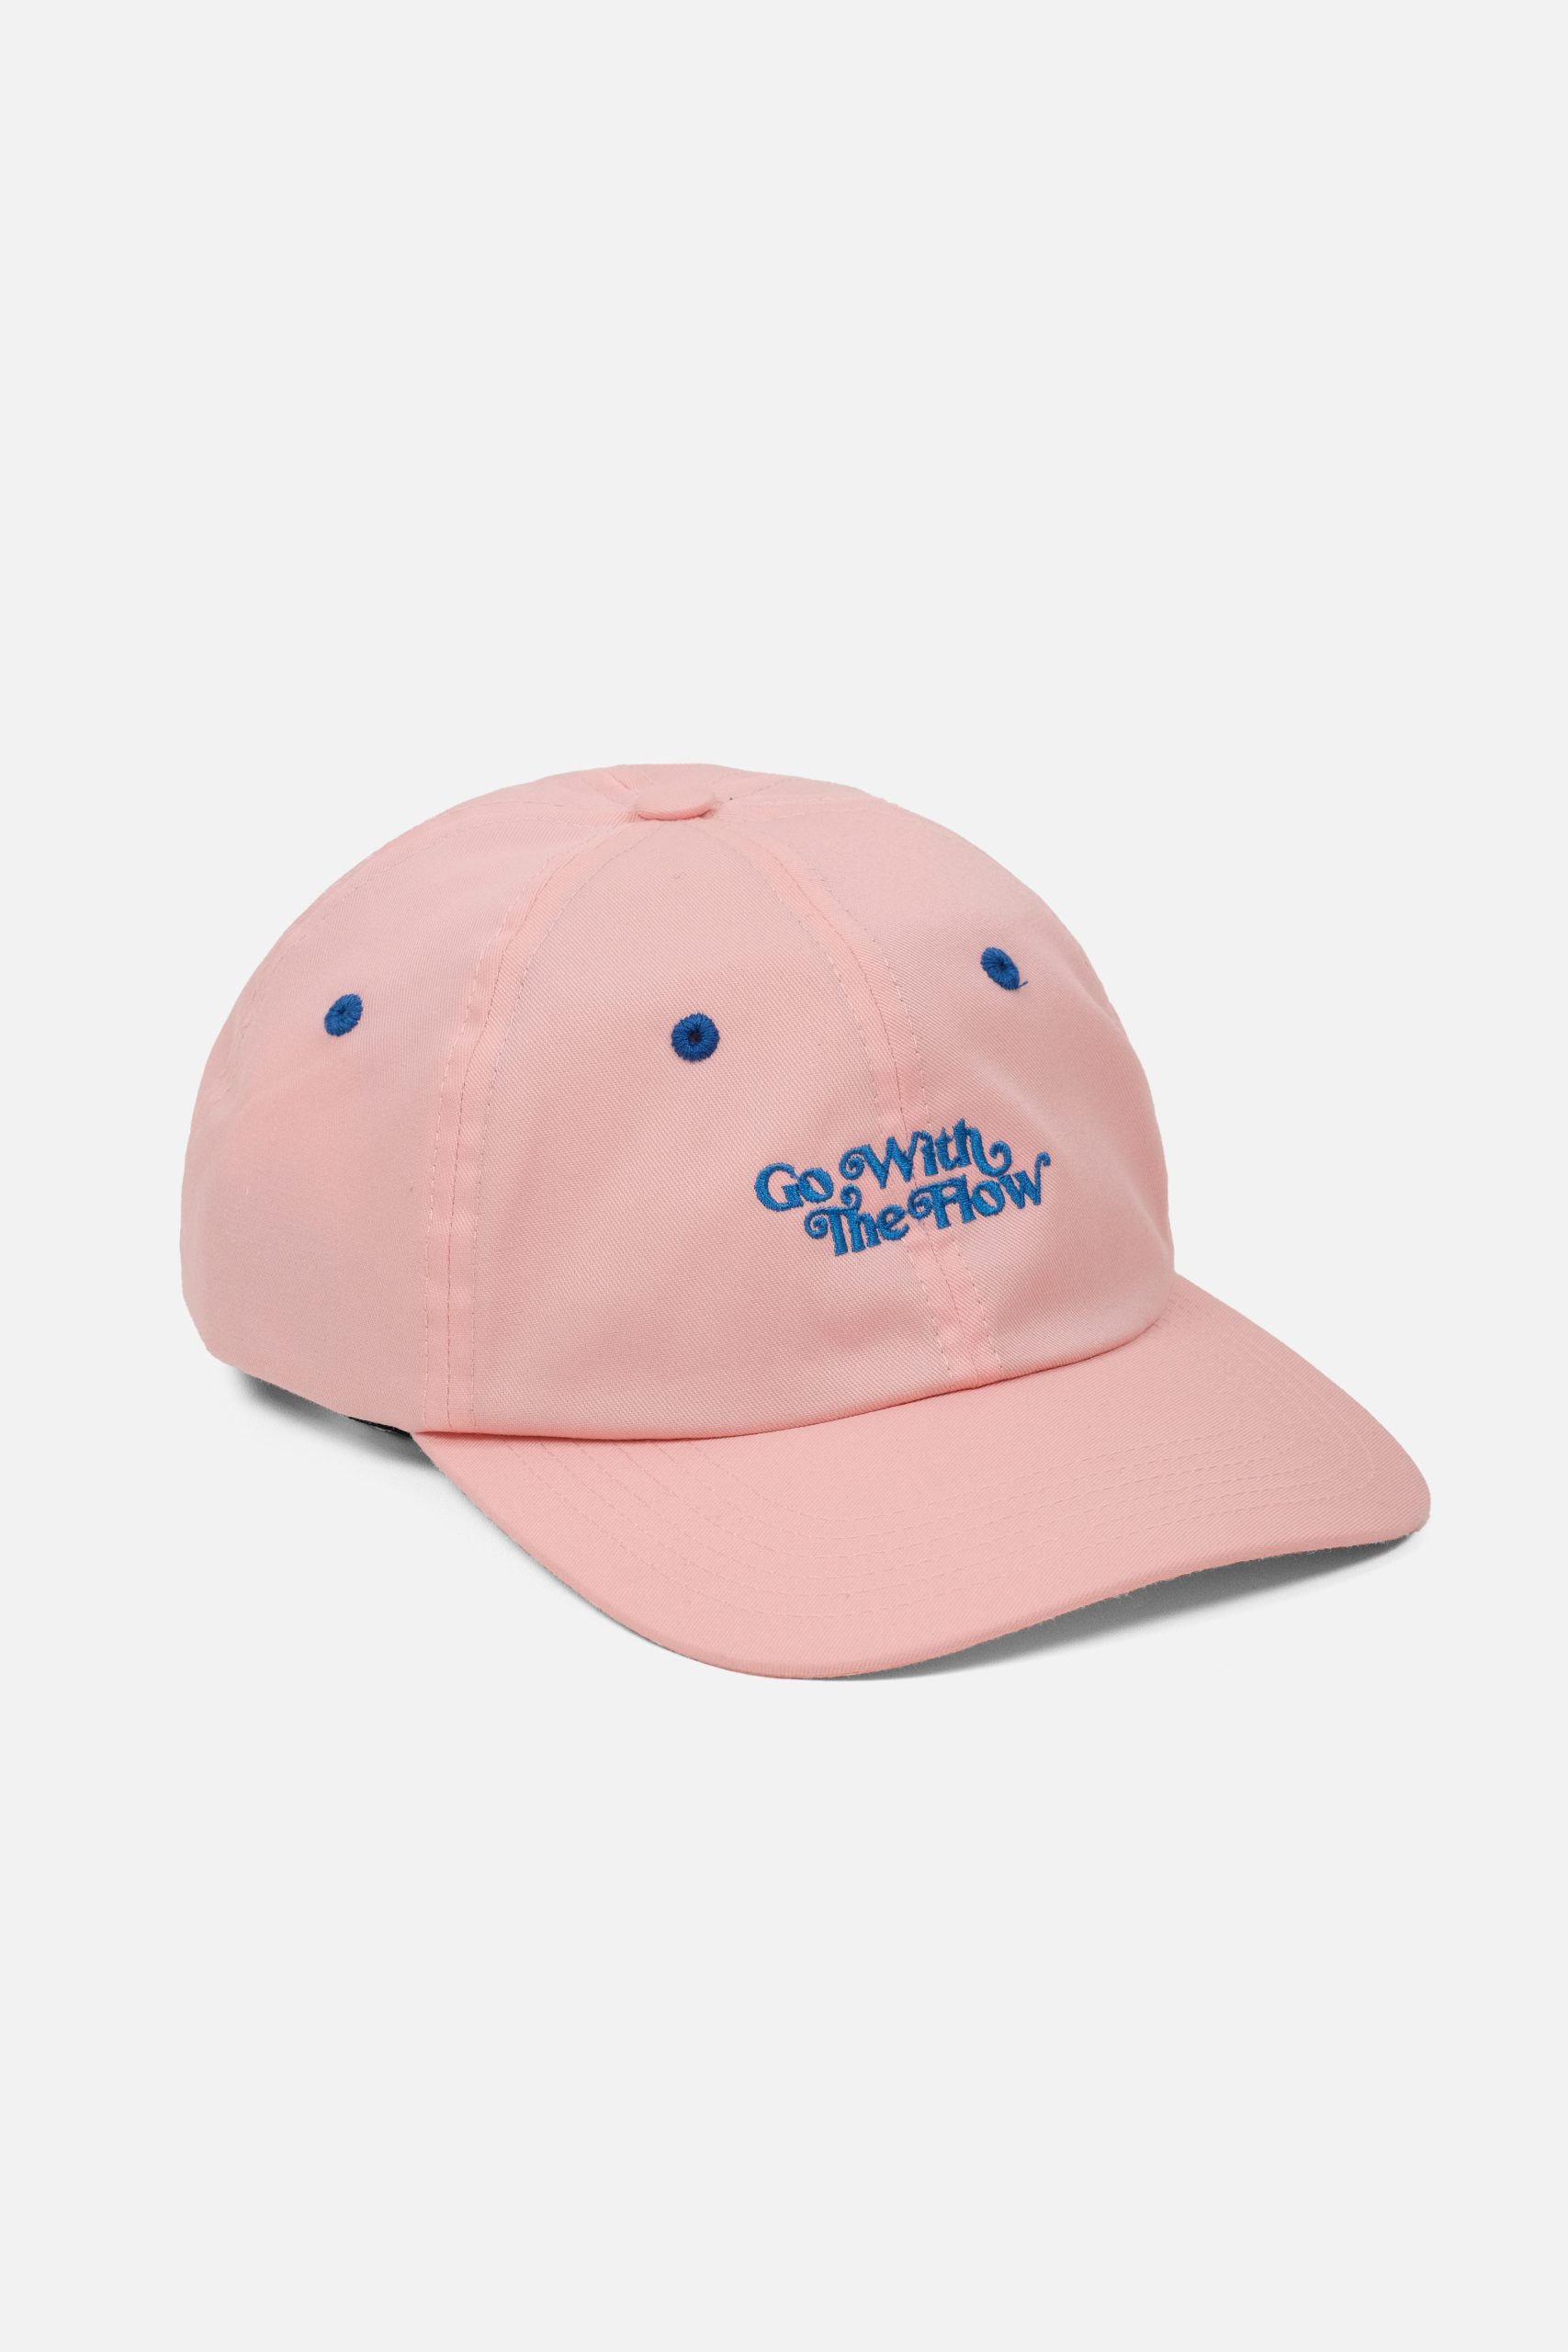 VIDOJ – FLOW PINK CAP